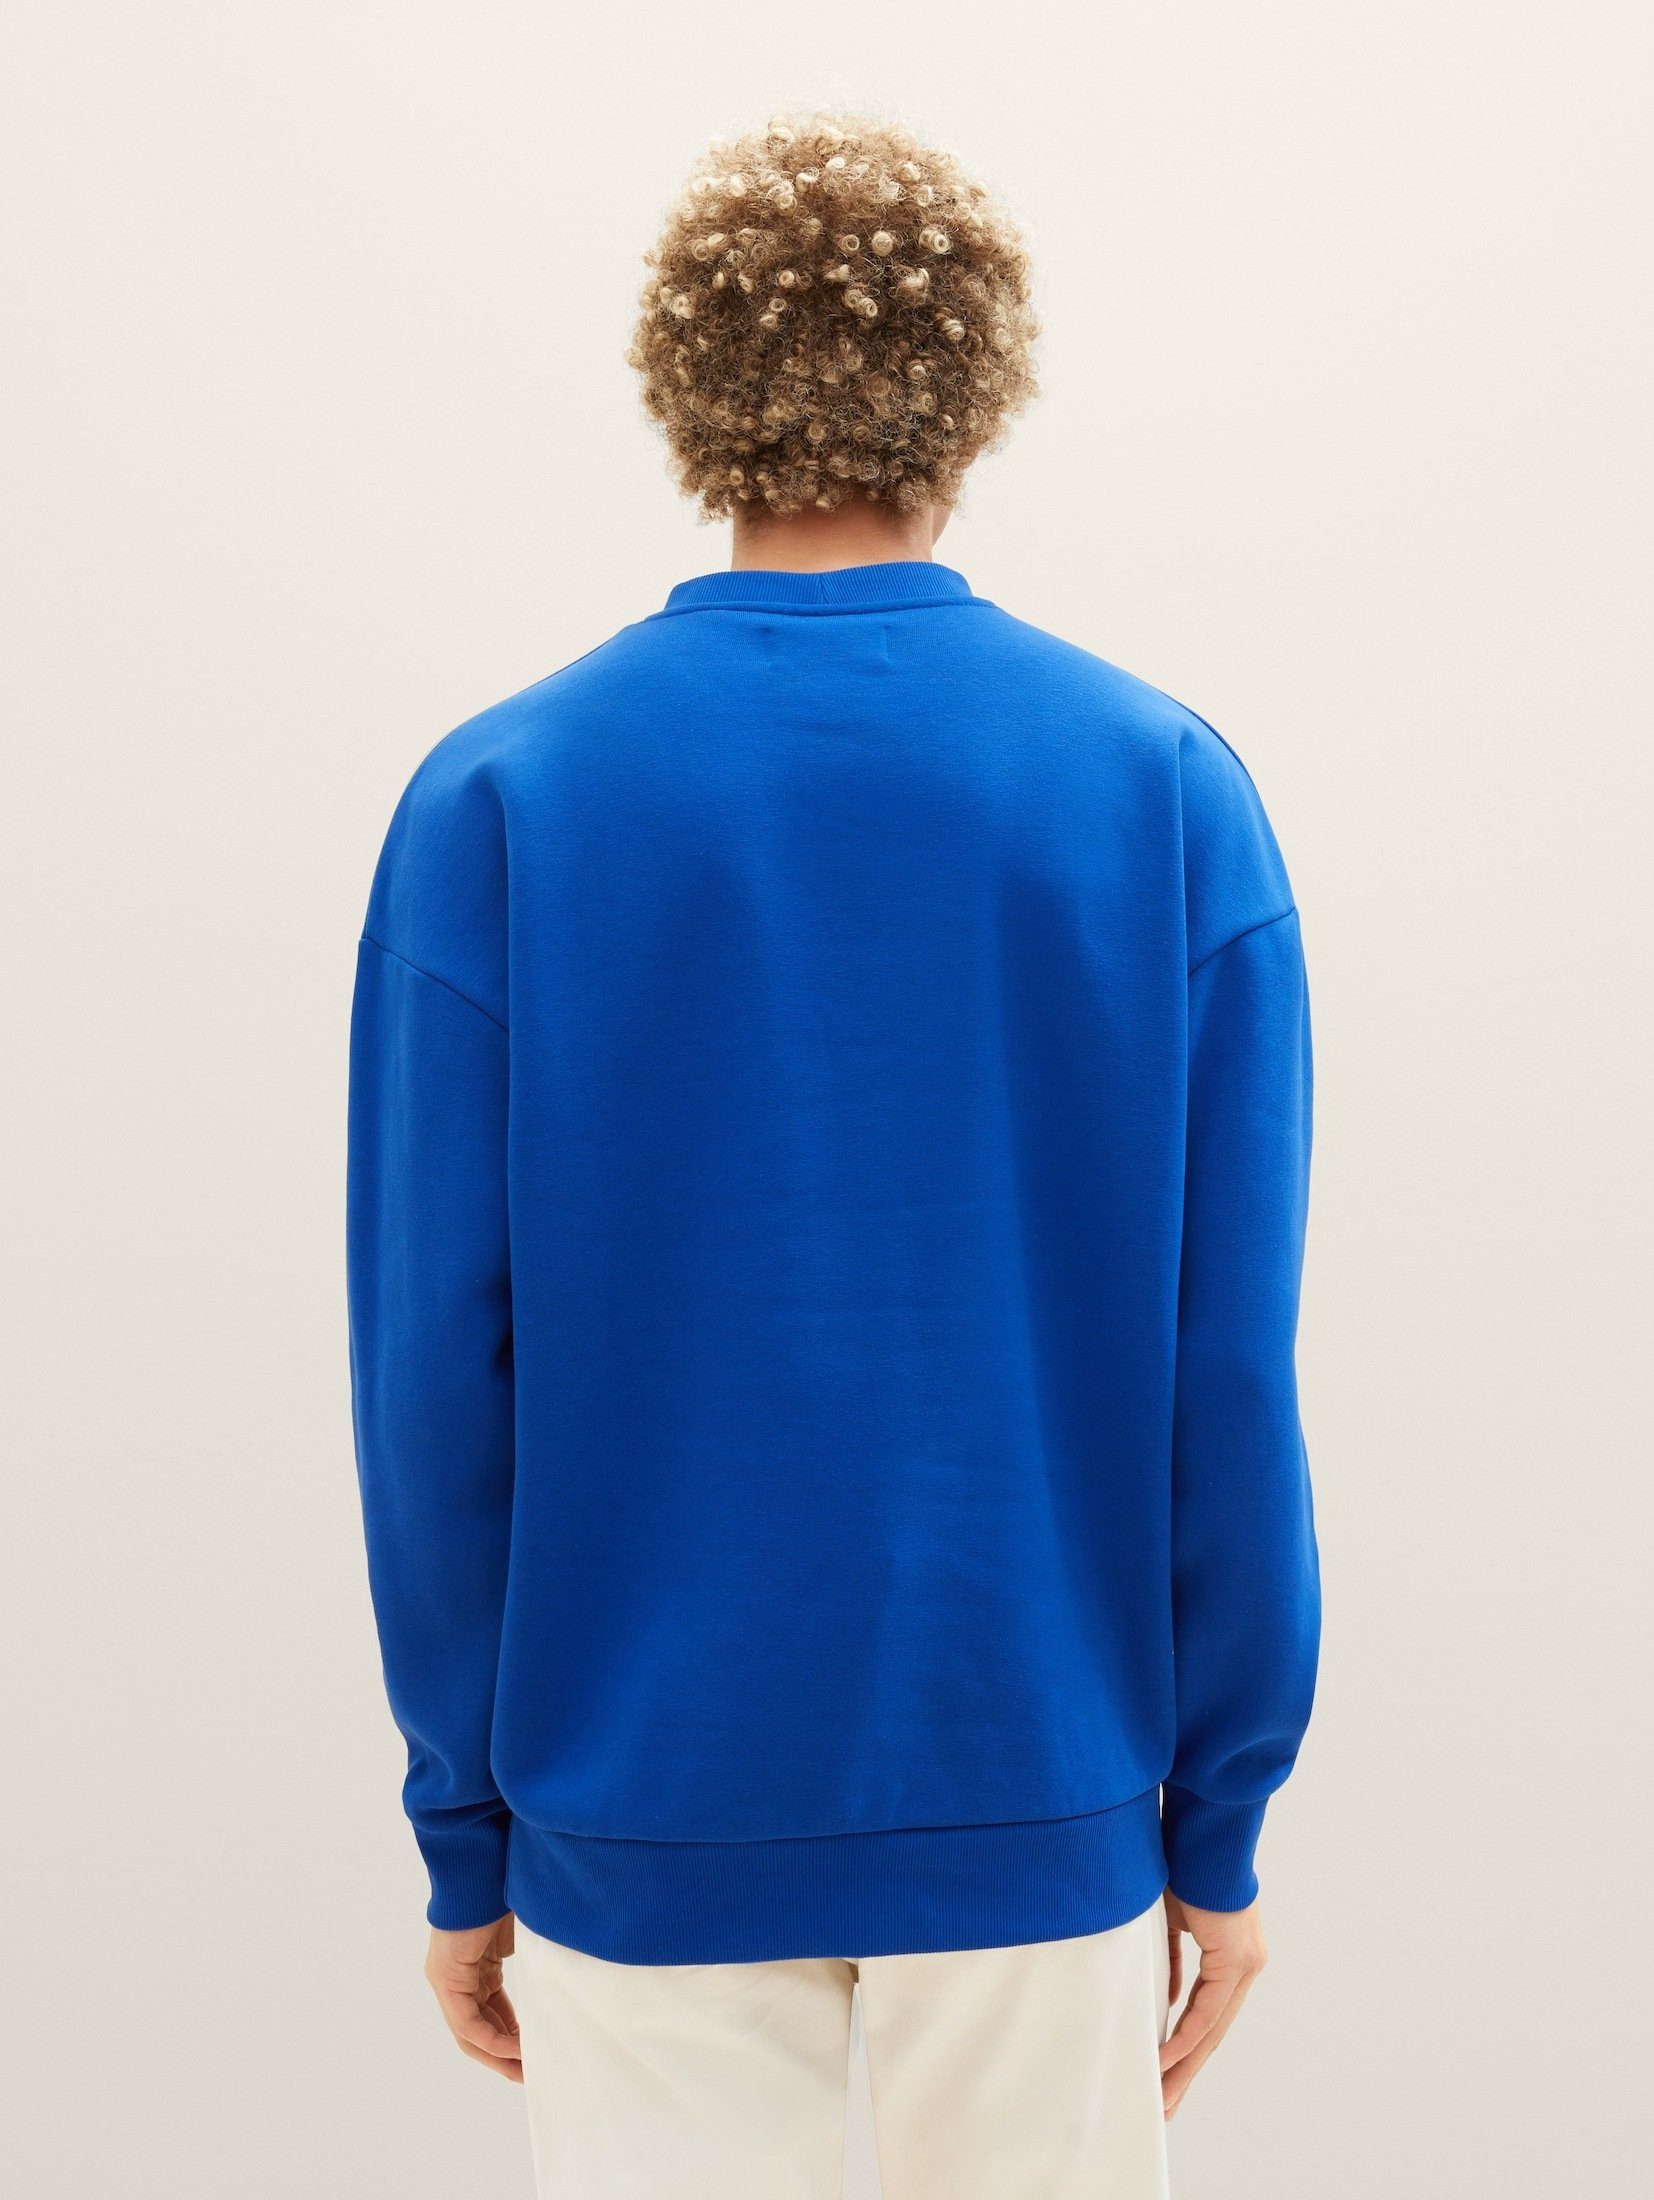 blue Print mit Denim shiny TAILOR TOM royal Logo Sweatshirt Hoodie